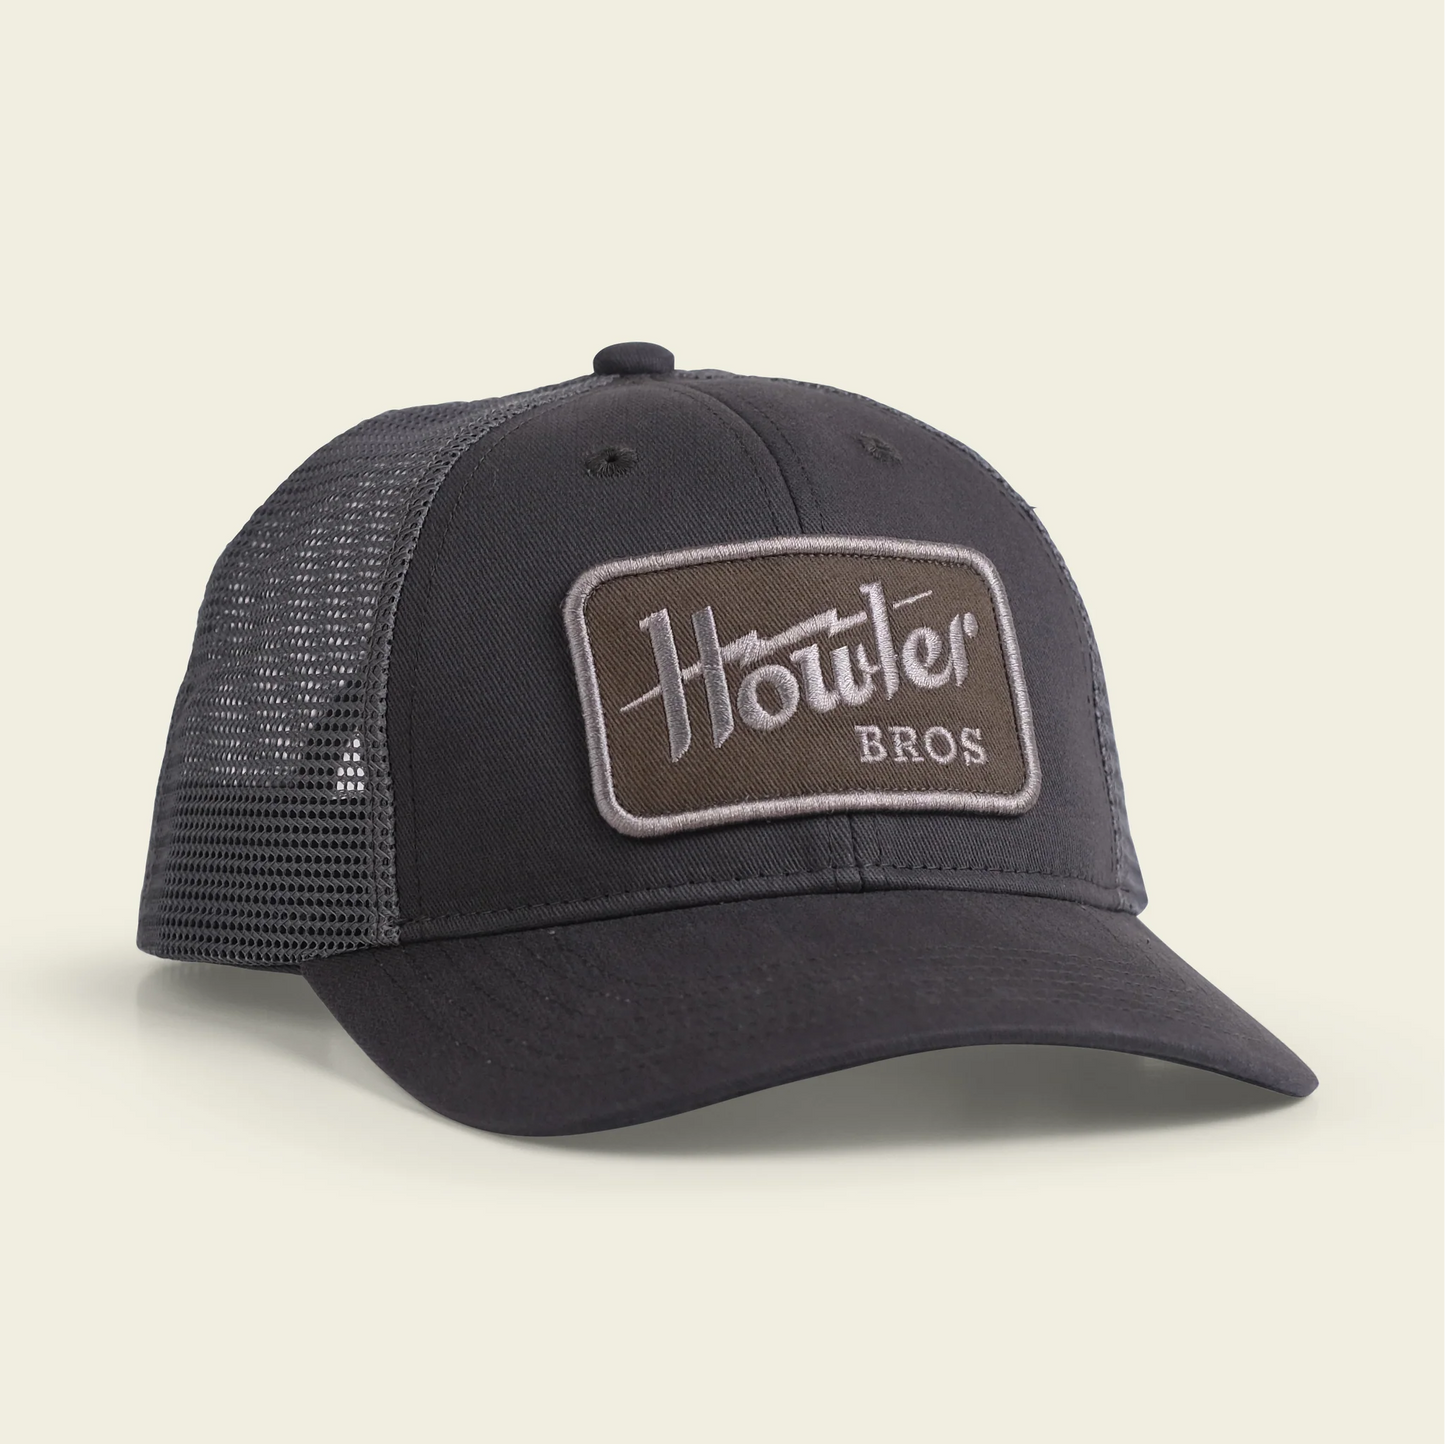 Howler Bros. ELECTRIC STANDARD HAT